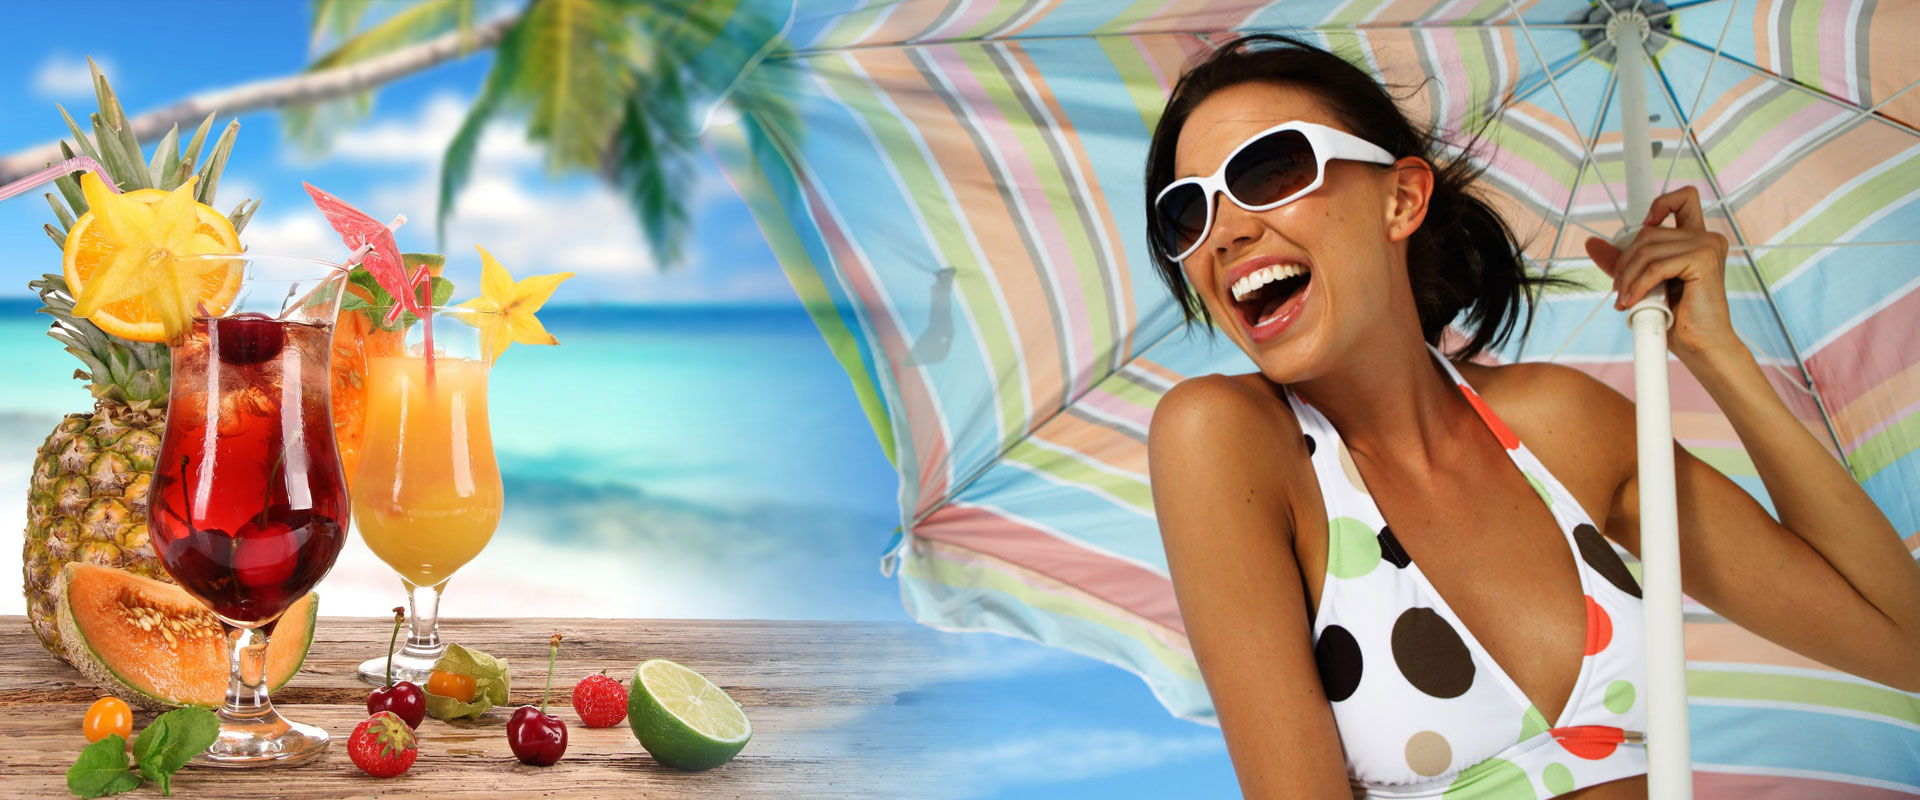 Offerte vacanze Mamatours prodotti  end vacanze blog vacanze perch��a� 